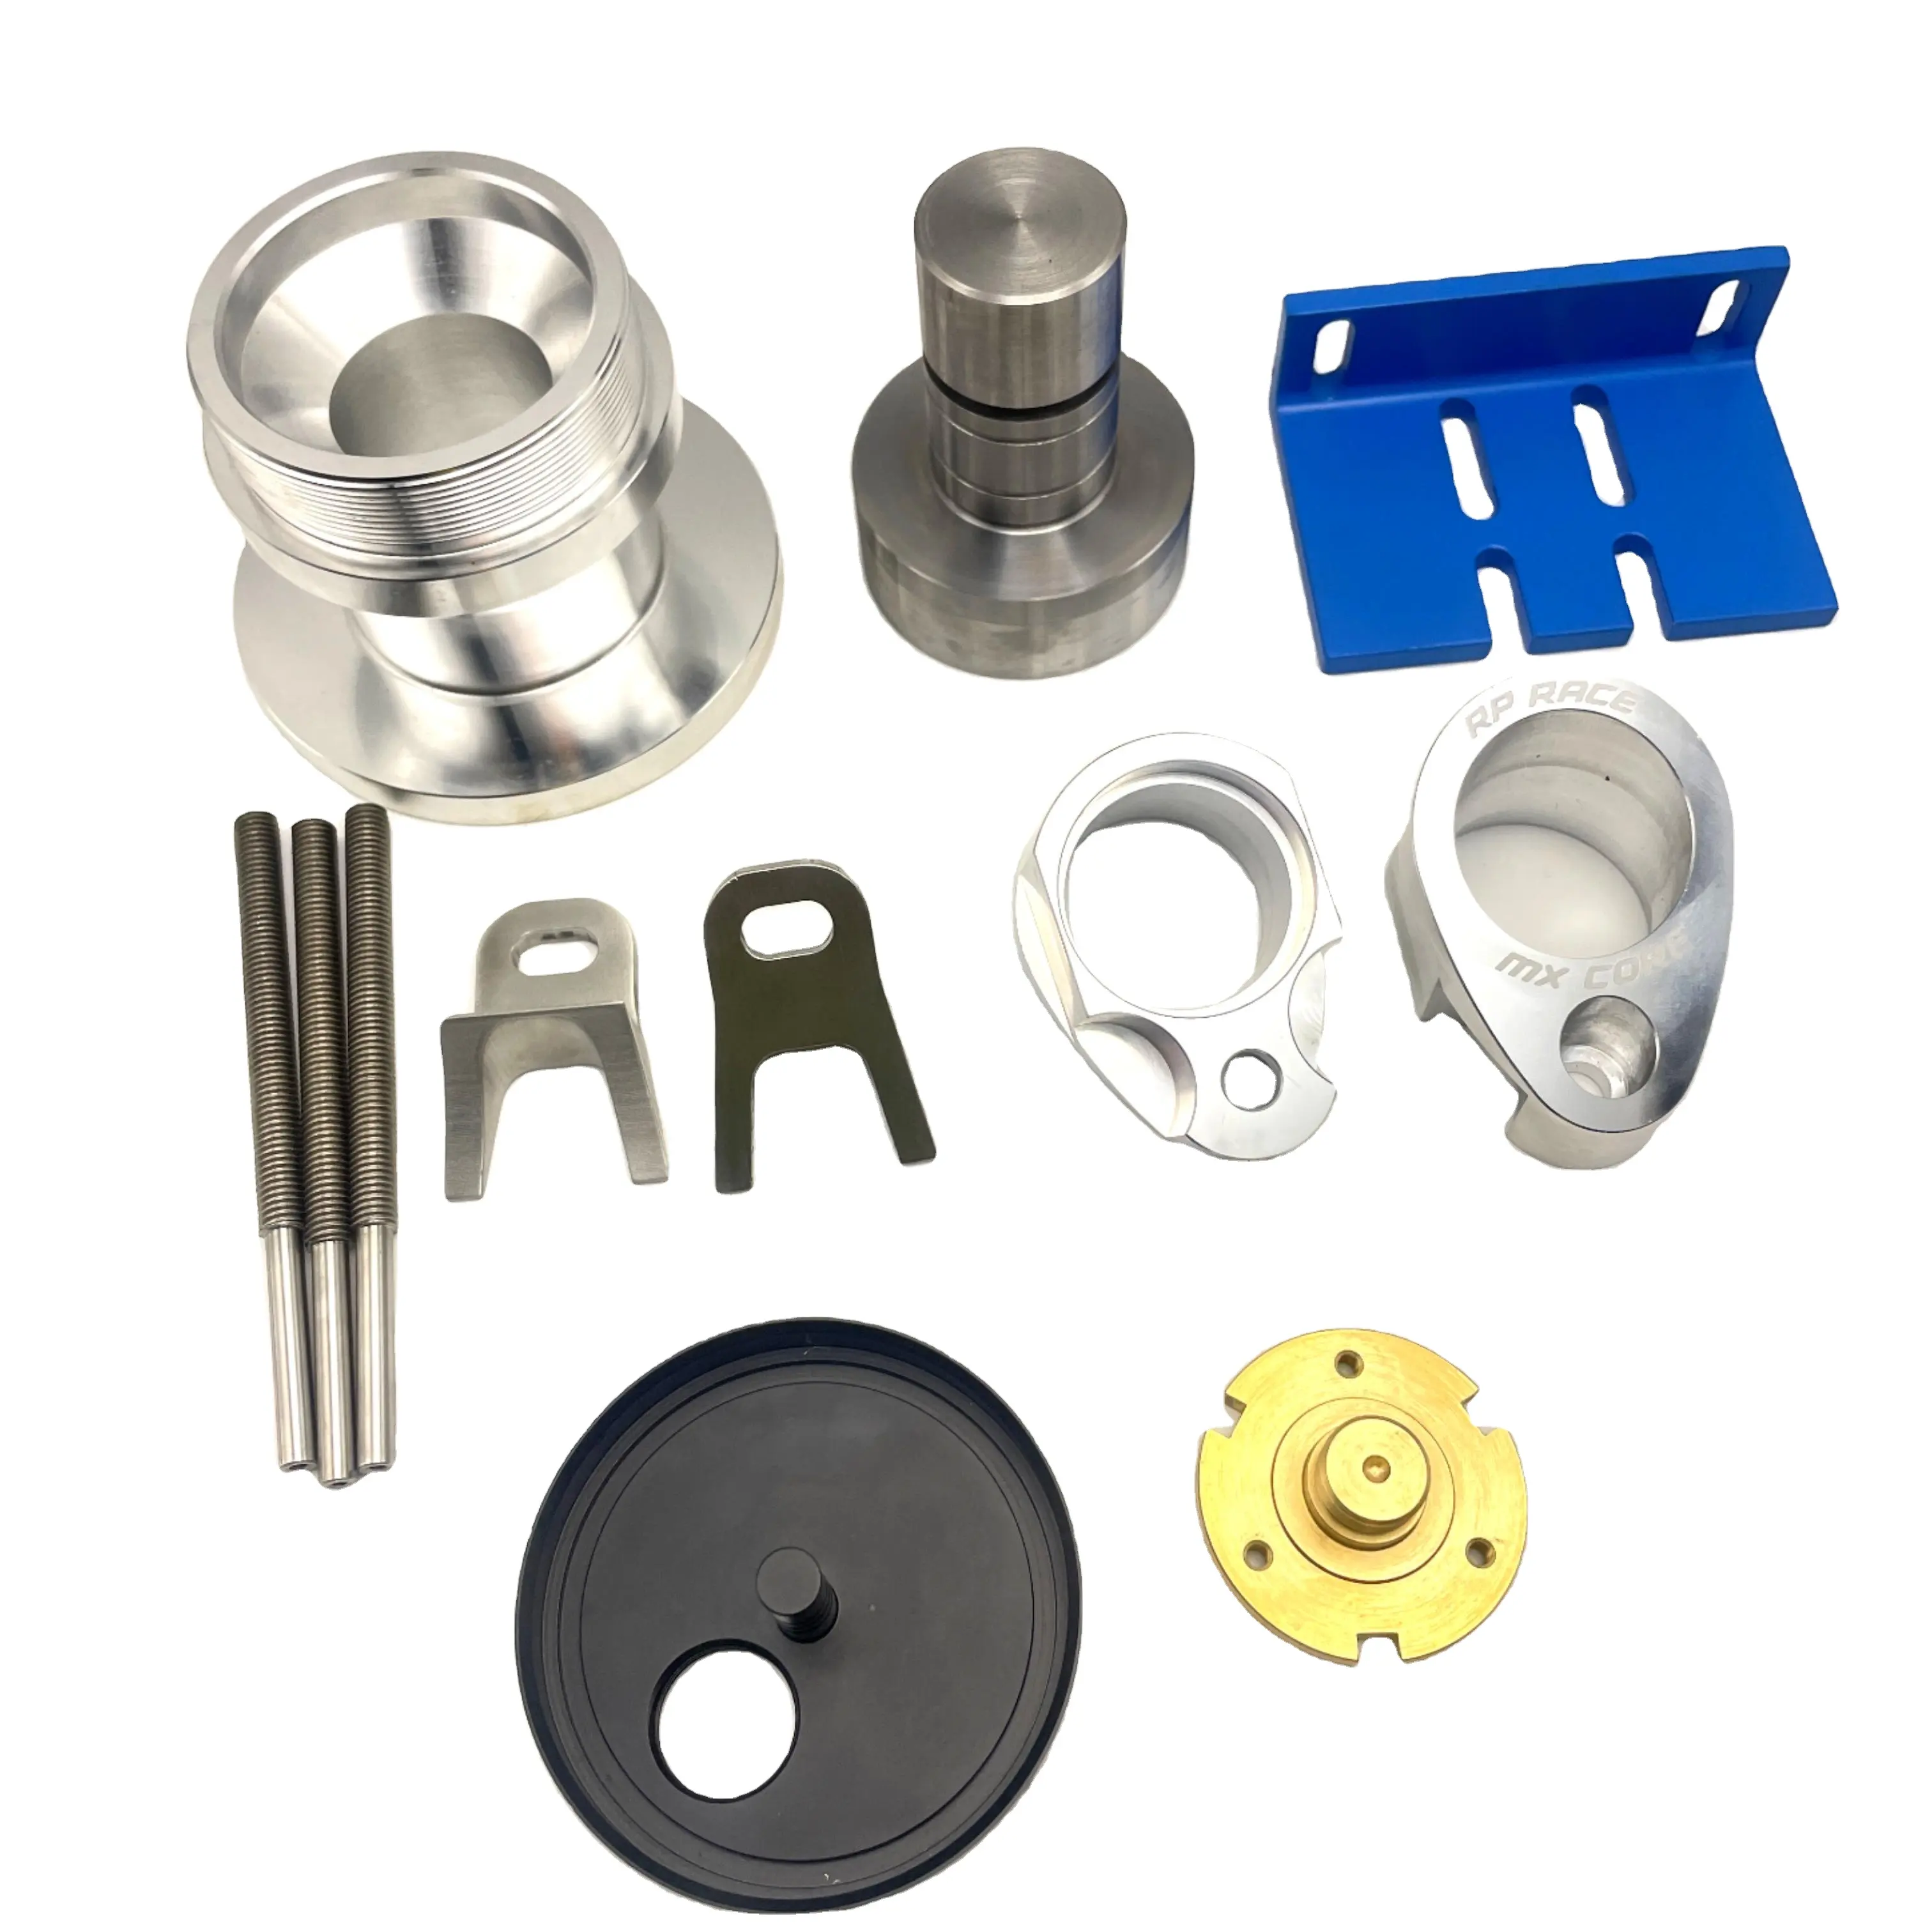 OEM custom CNC machining acrylic parts medical equipment spare parts Metal Die Casting Anodized 6061 Aluminum Alloy Auto Parts